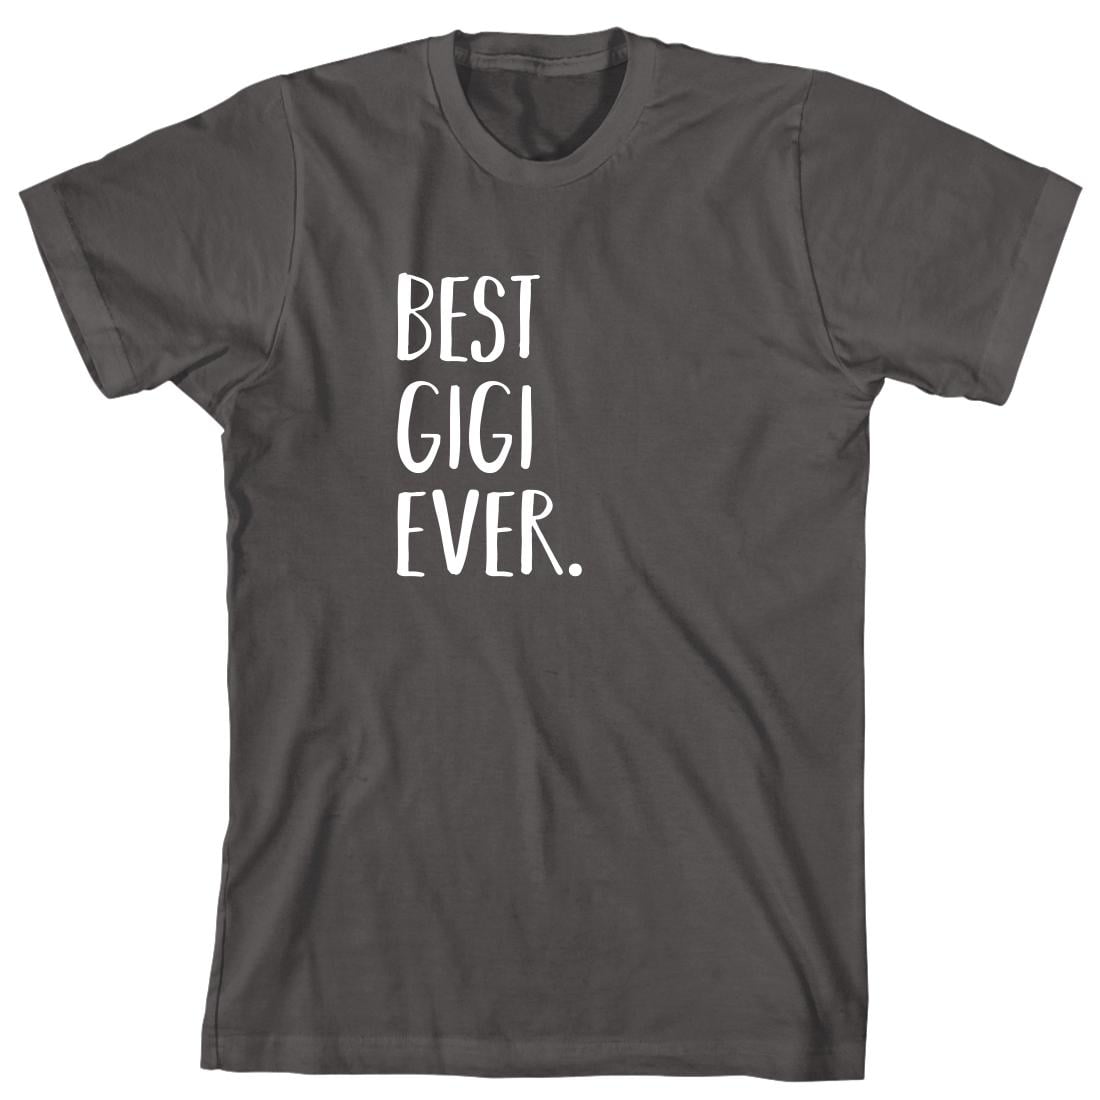 Best Gigi Ever Men's Shirt - ID: 1838 - Walmart.com